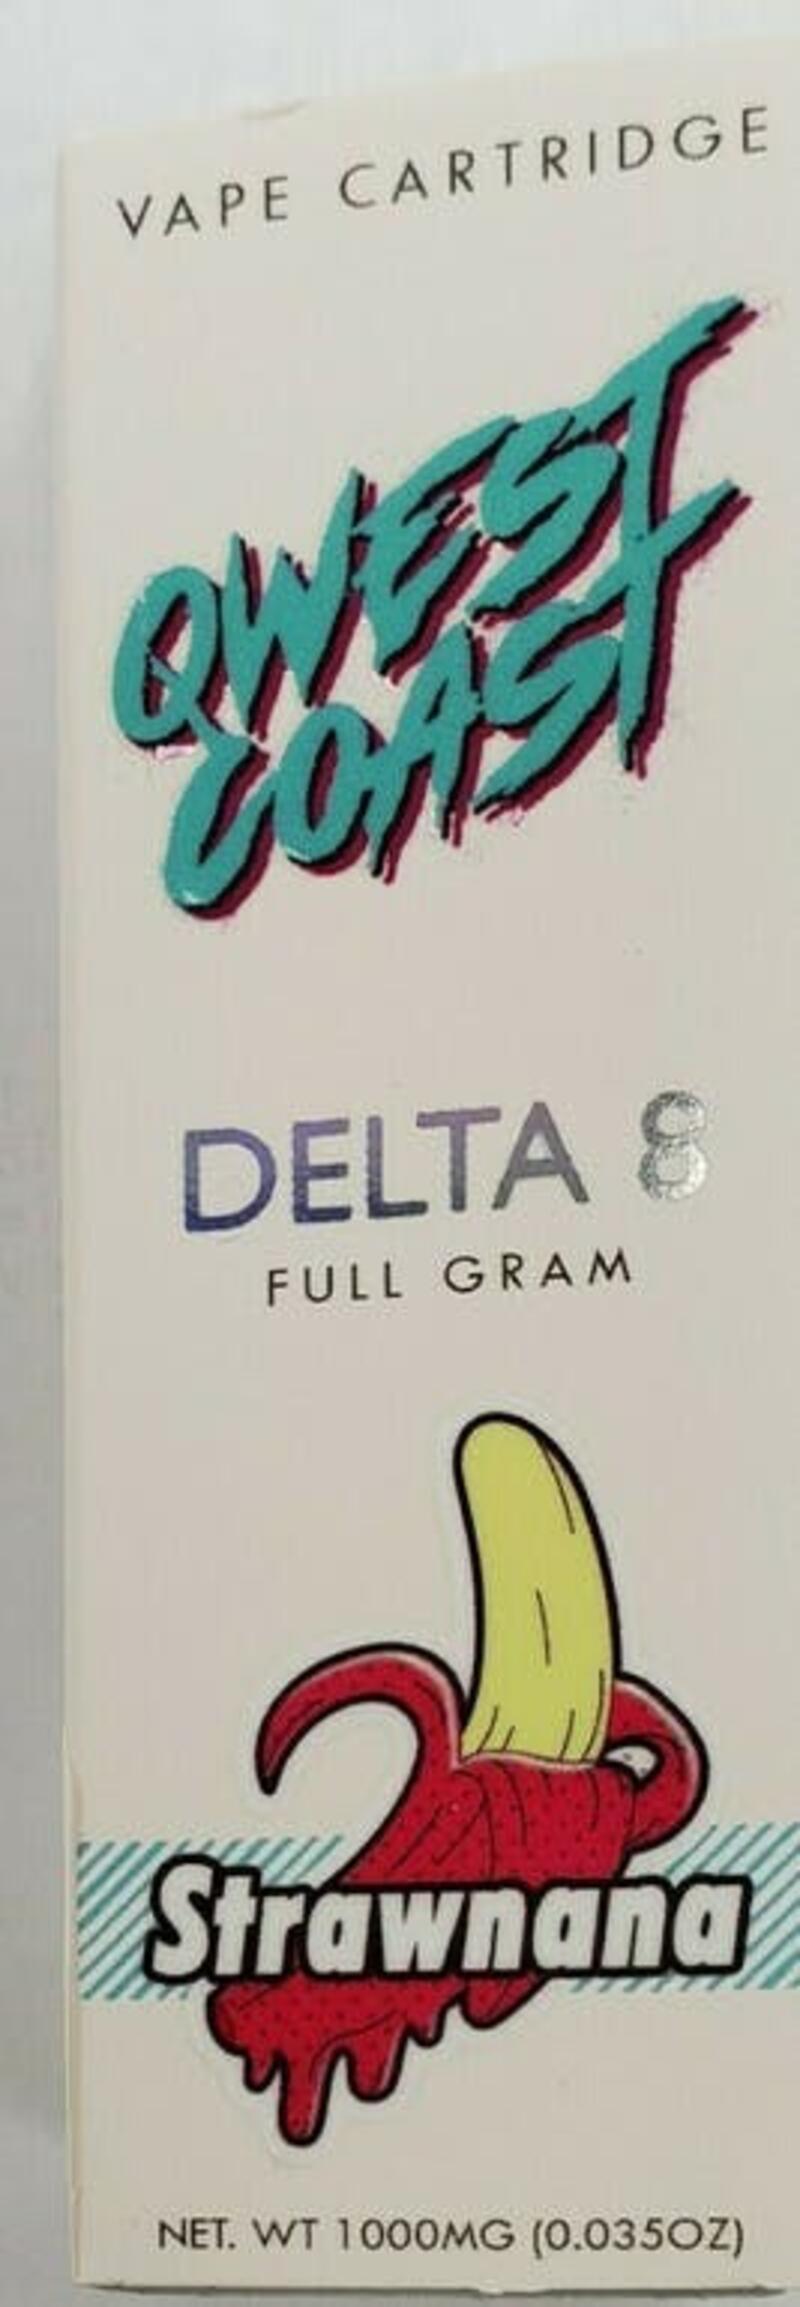 Delta 8: Strawnana 1G Cart